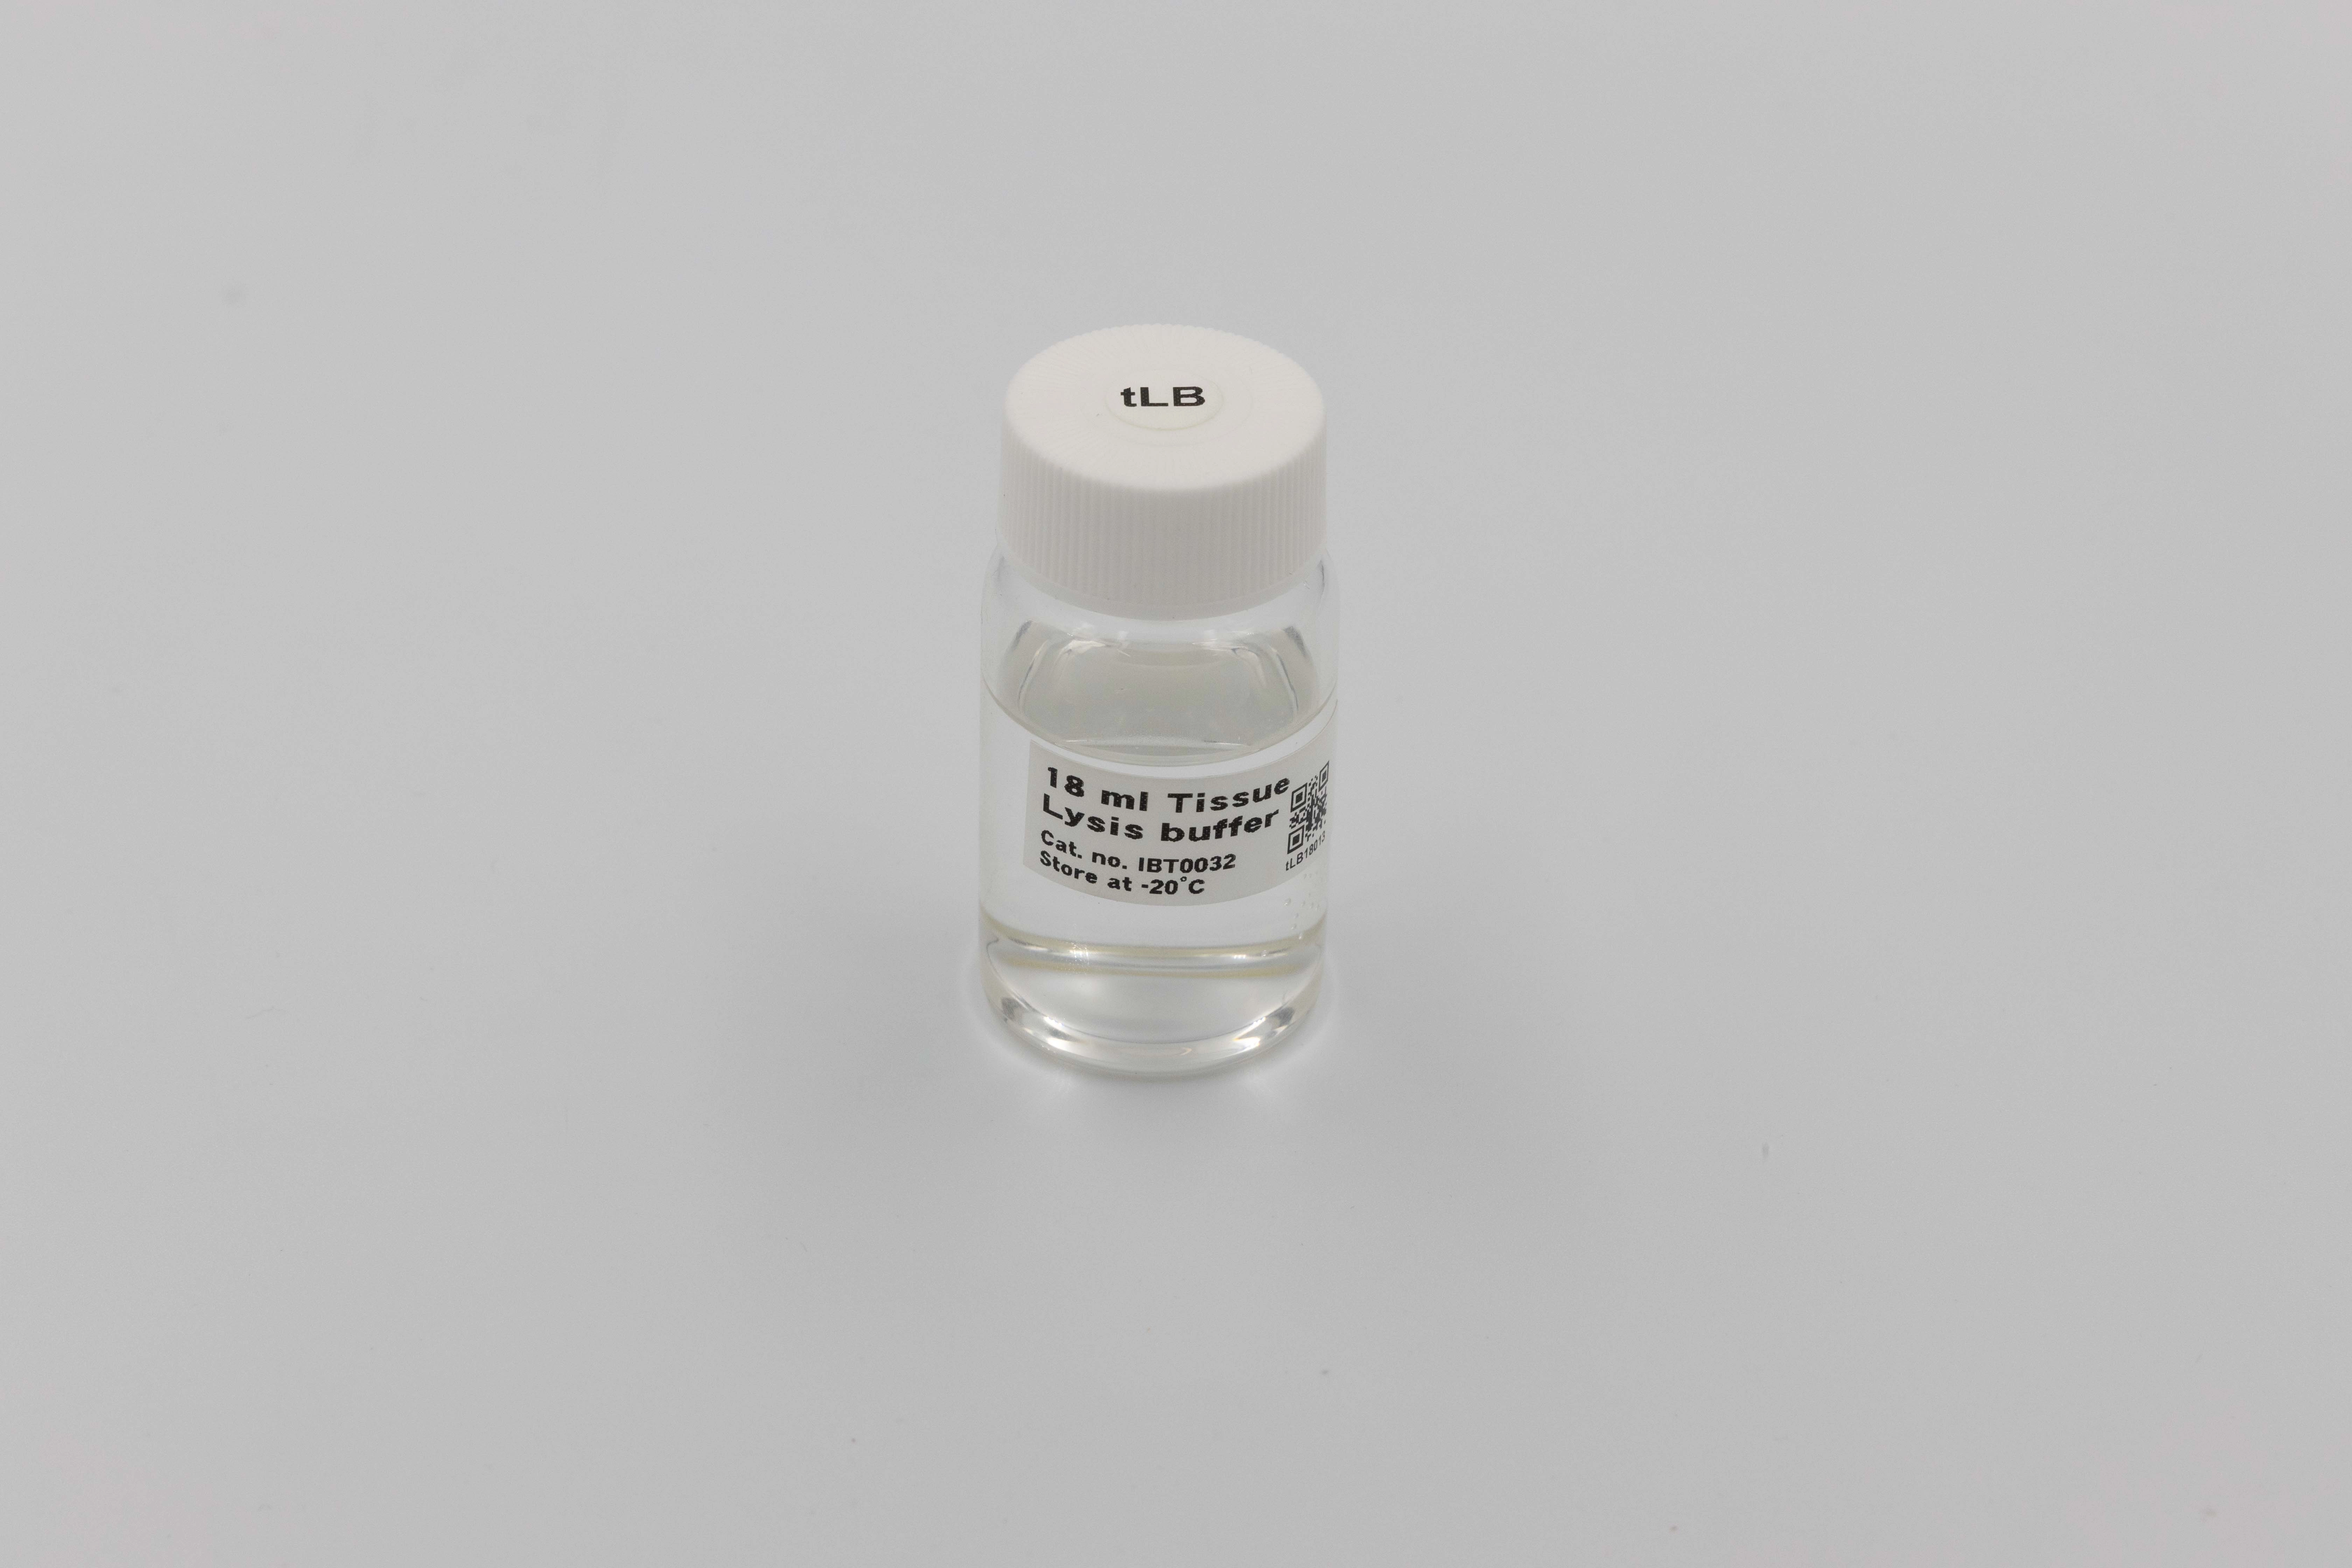 Tissue Lysis buffer (18 ml)